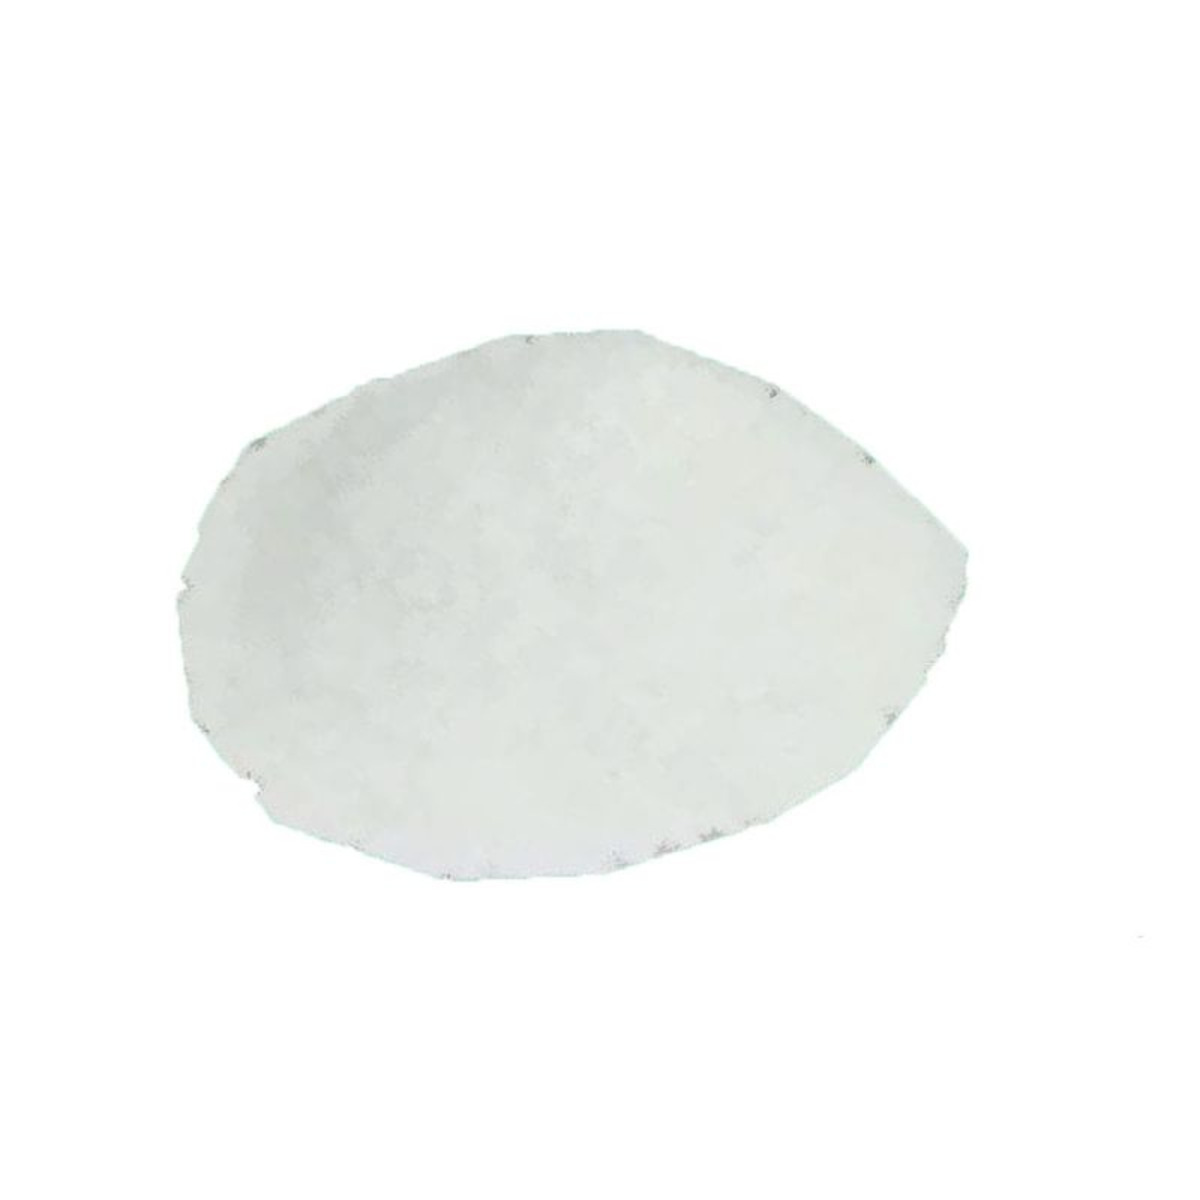 M2 Fishing Plastgum Polvere Plastificante per Zavorre -  Bianca Fosforescente - 100 g        